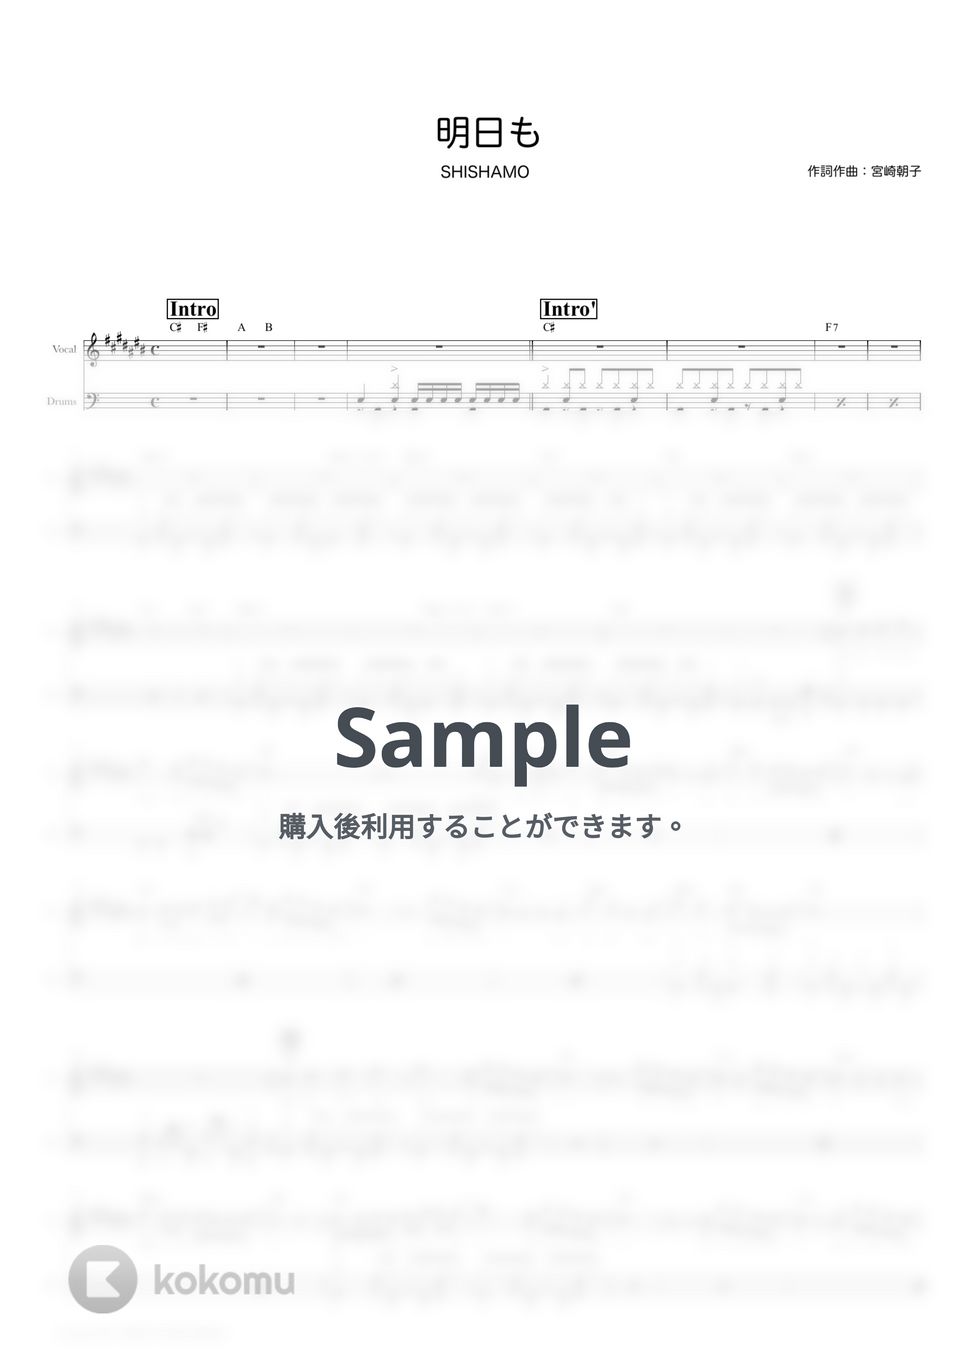 SHISHAMO - 明日も (ドラムスコア・歌詞・コード付き) by TRIAD GUITAR SCHOOL